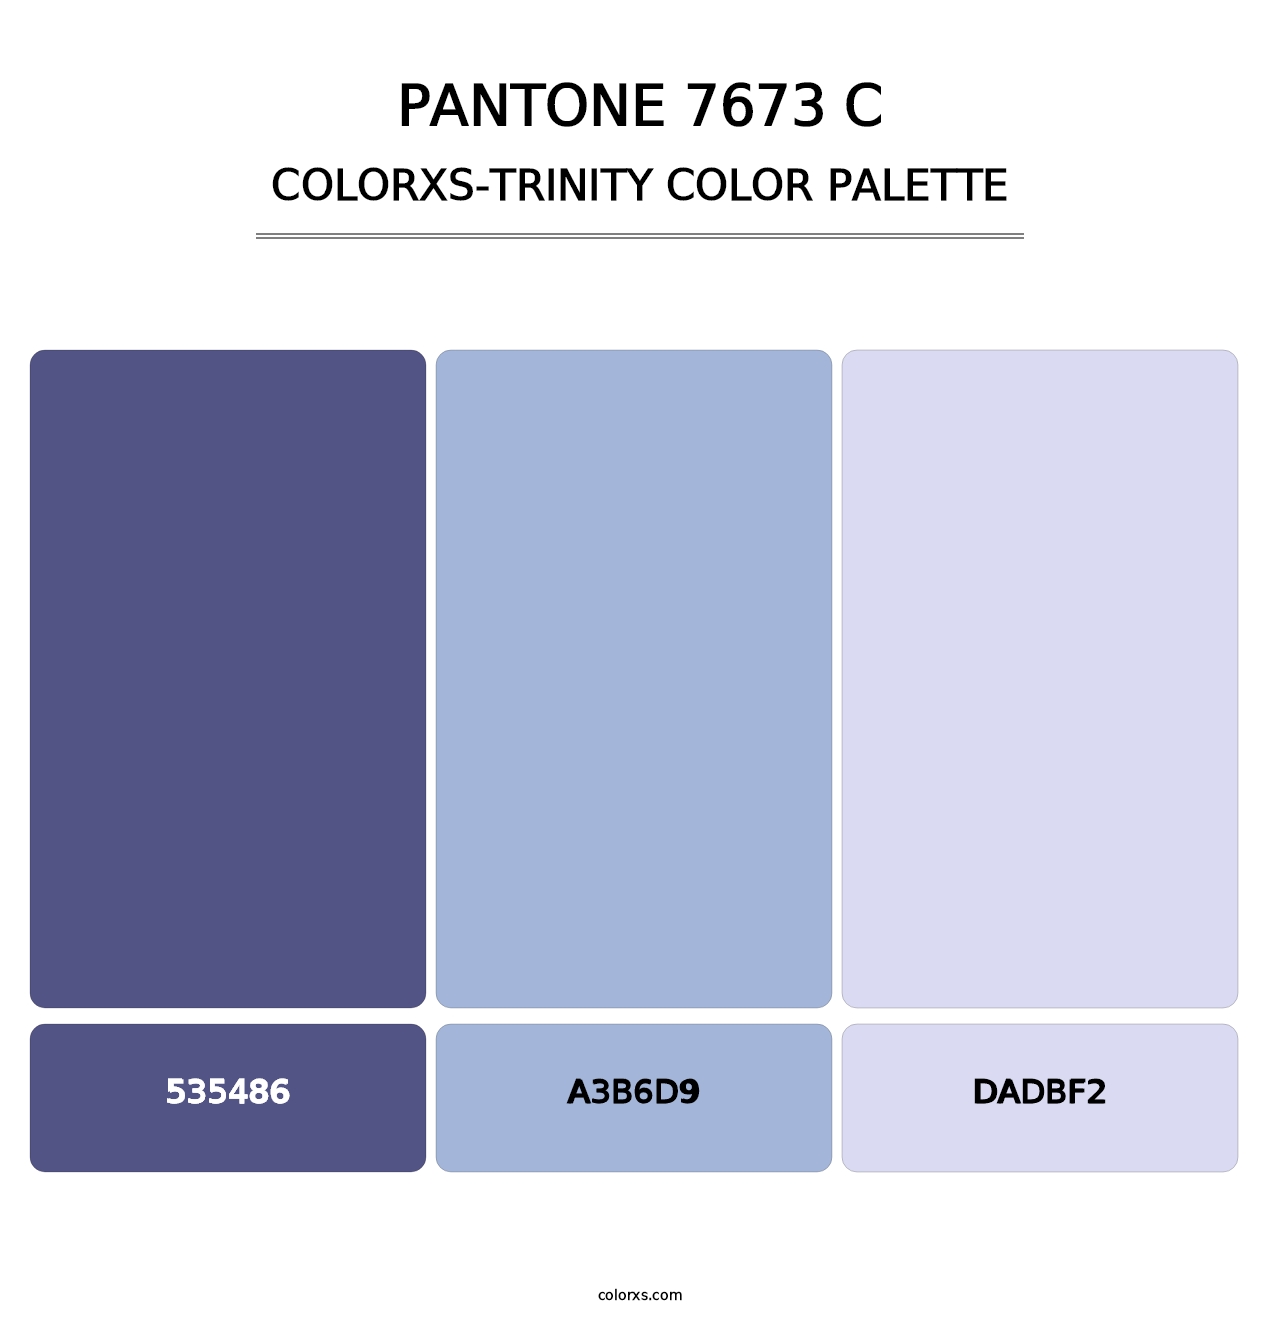 PANTONE 7673 C - Colorxs Trinity Palette